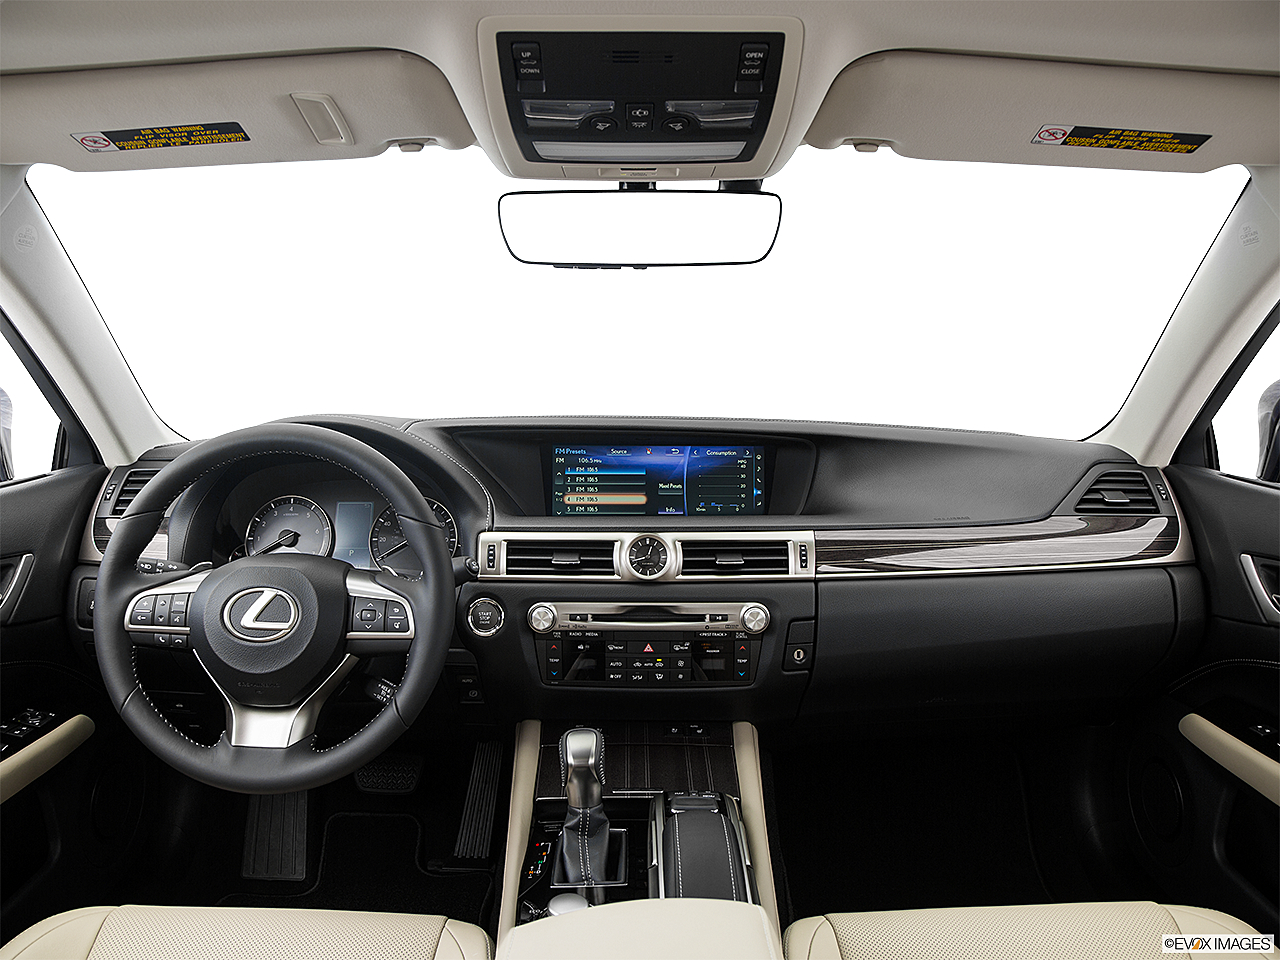 2016 Lexus GS 350 4dr Sedan - Research - GrooveCar